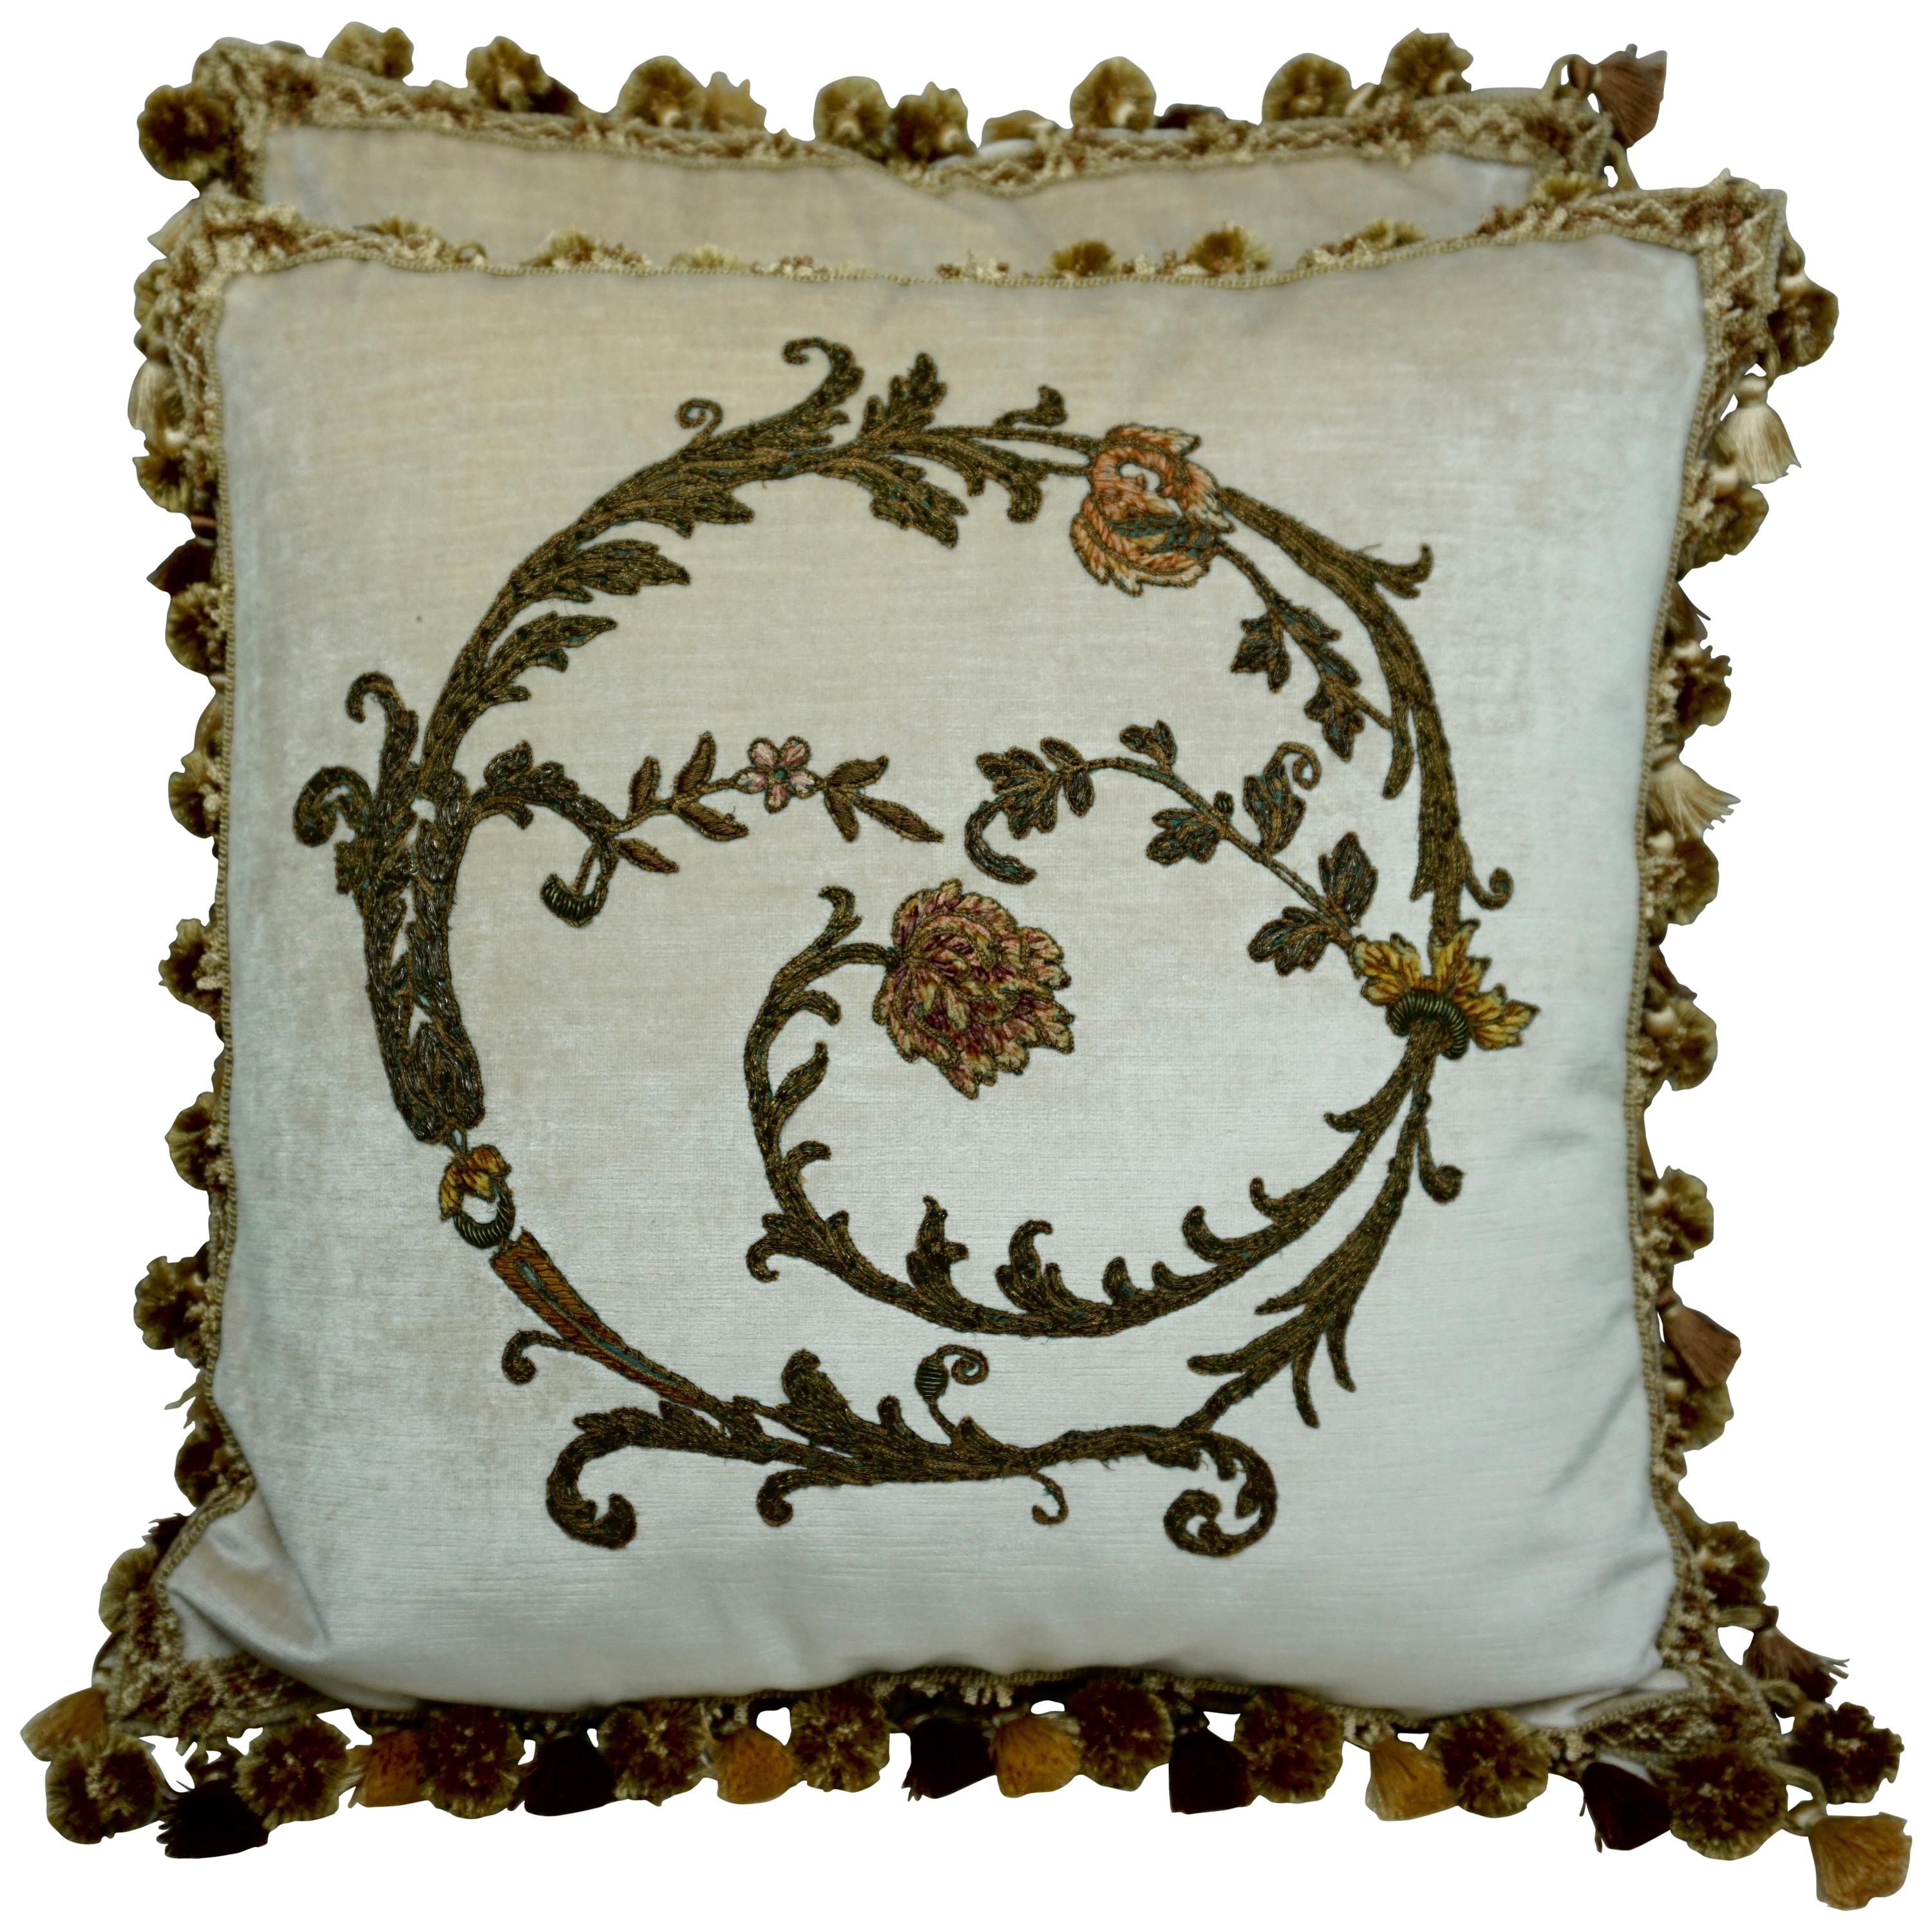 Pair of Custom Cream Velvet Applique' Pillows by Melissa Levinson